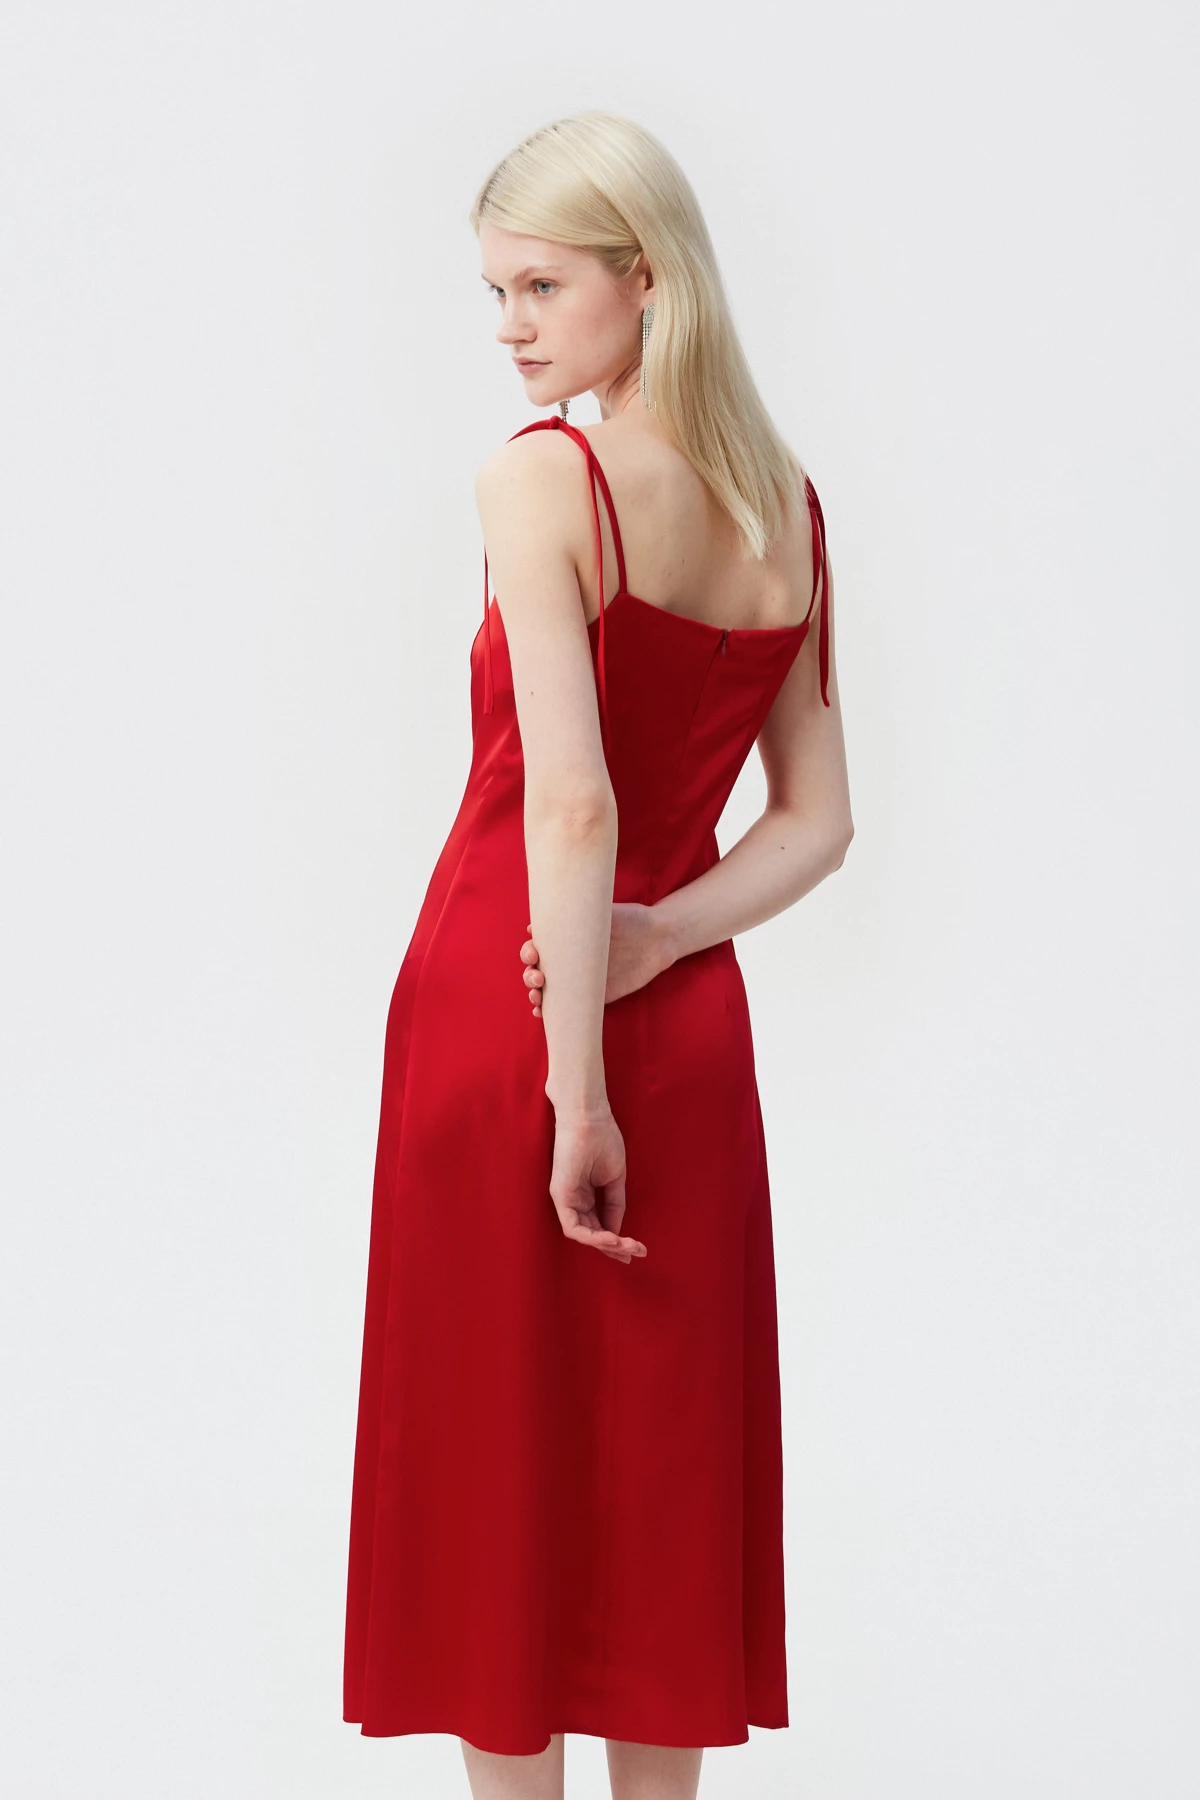 Red satin midi dress with leg slit, photo 4